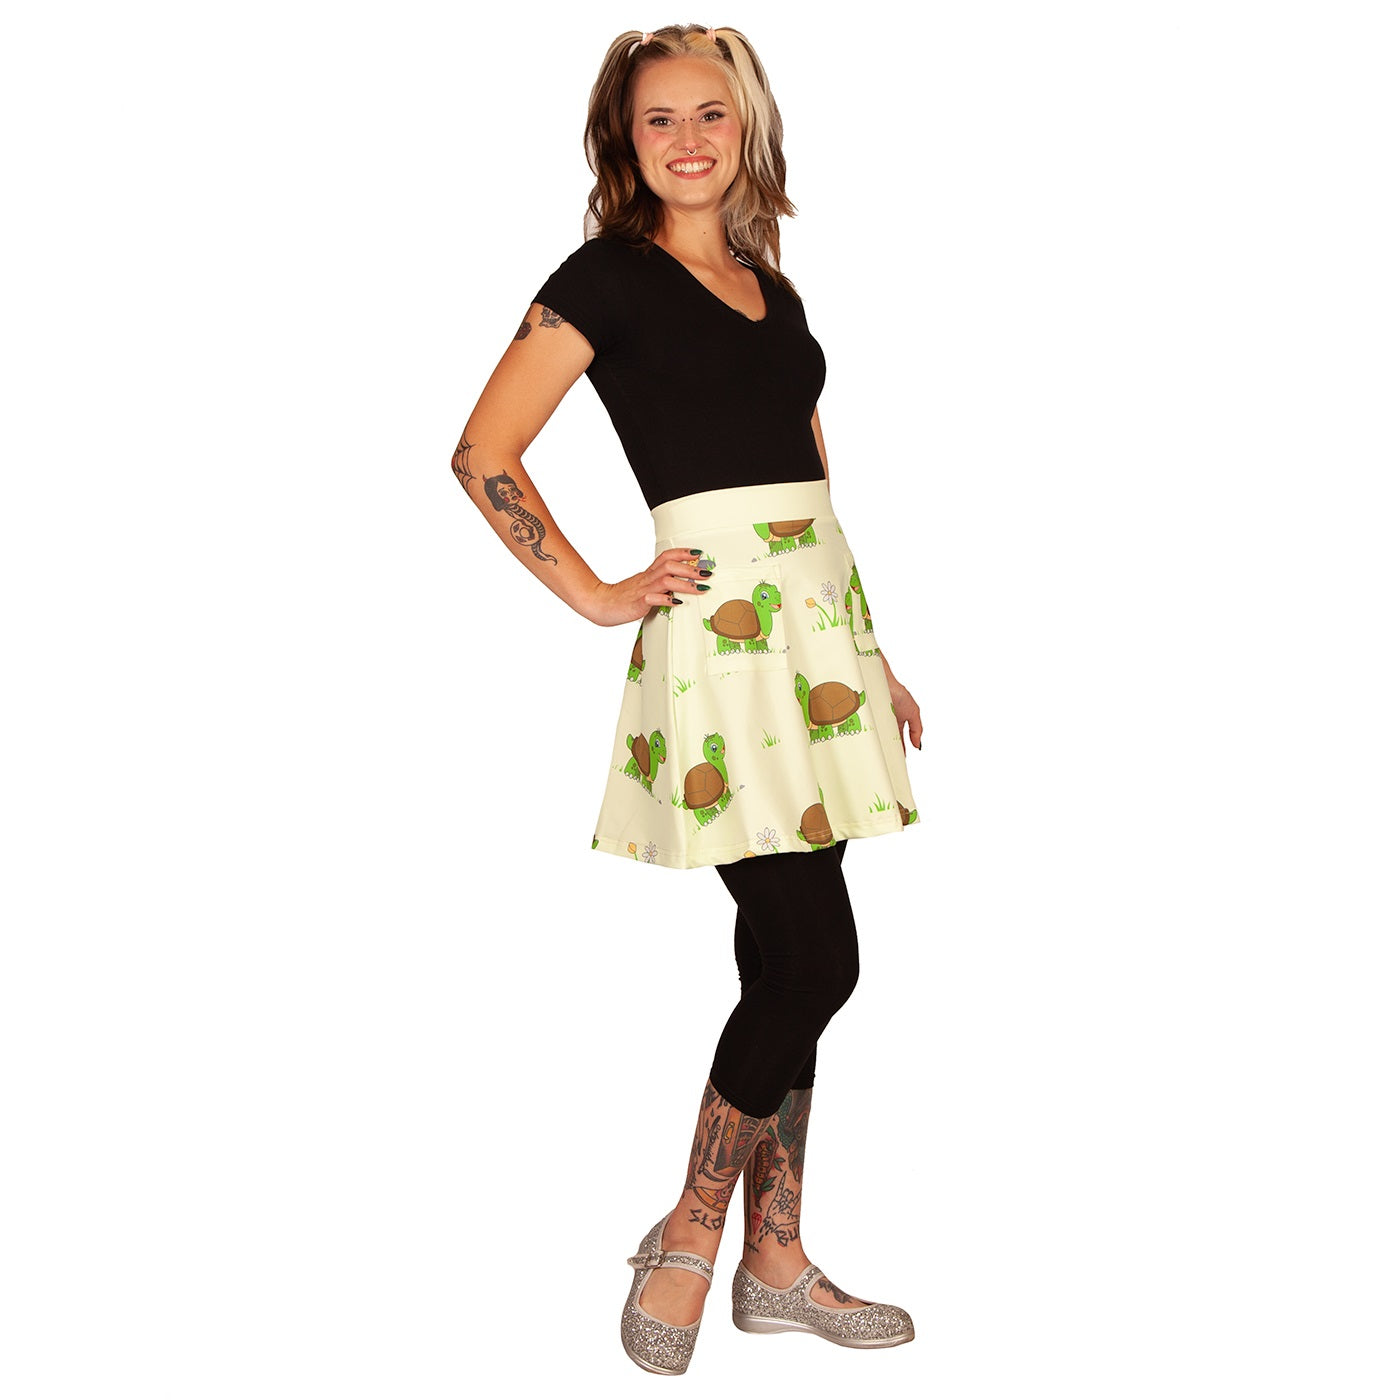 Wisdom Short Skirt by RainbowsAndFairies.com.au (Tortoise - Turle - Skirt With Pockets - Aline Skirt - Vintage Inspired - Kitsch - Animal Print) - SKU: CL_SHORT_WISDO_ORG - Pic-04